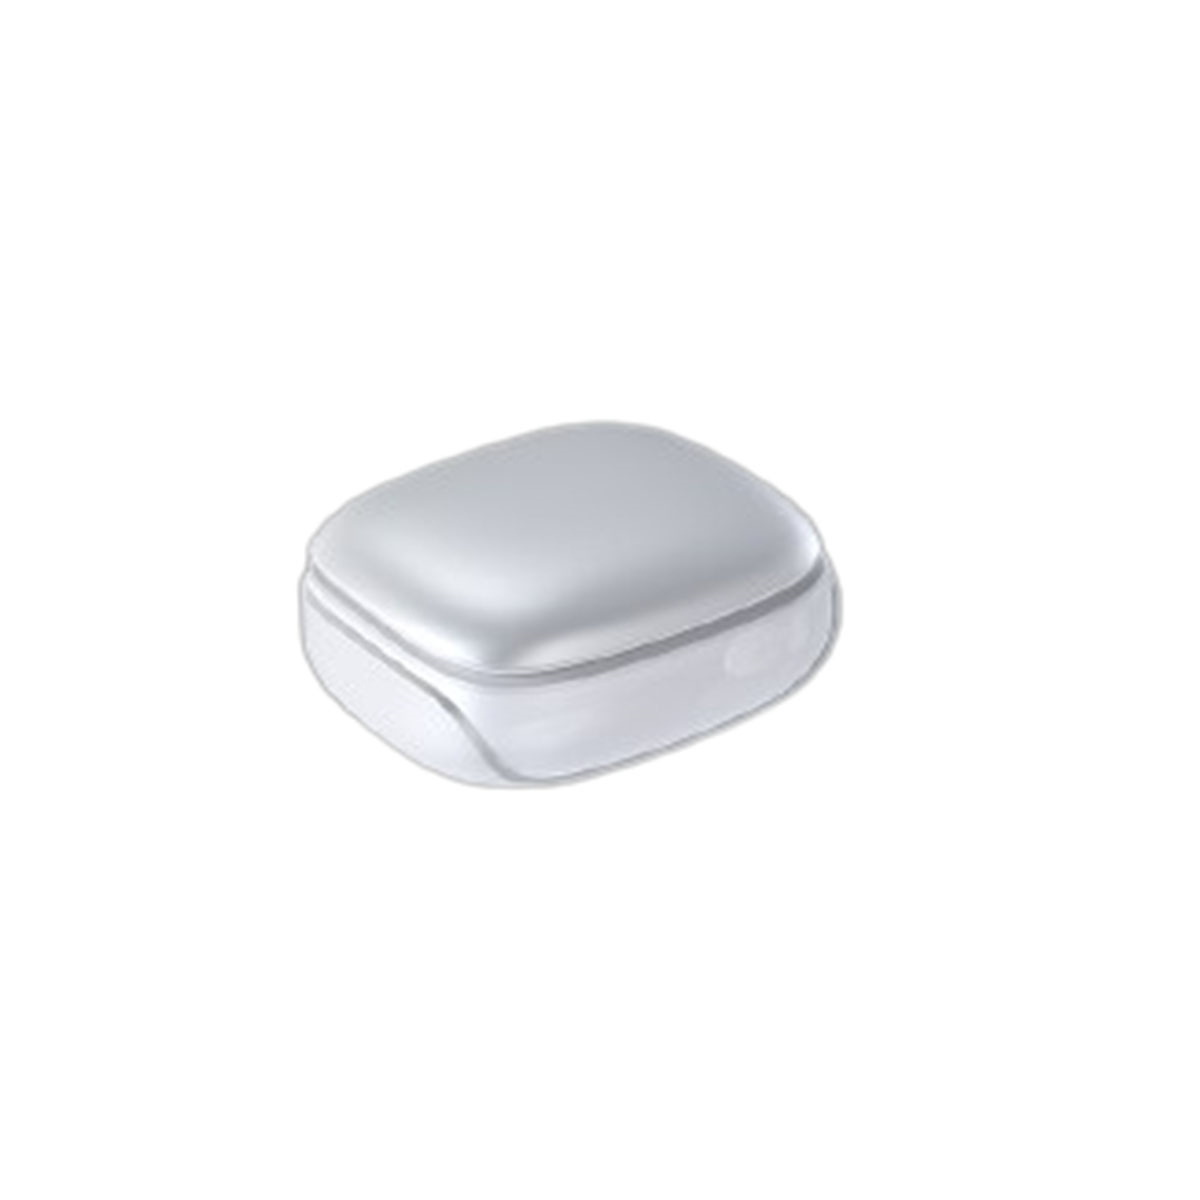 ENBAOXIN Gelbes drahtloses schmerzfreies HD-Klangqualität, - Gelb Tragen, Bluetooth On-ear Bluetooth Bluetooth-Headset Knochenleitung, Kopfhörer